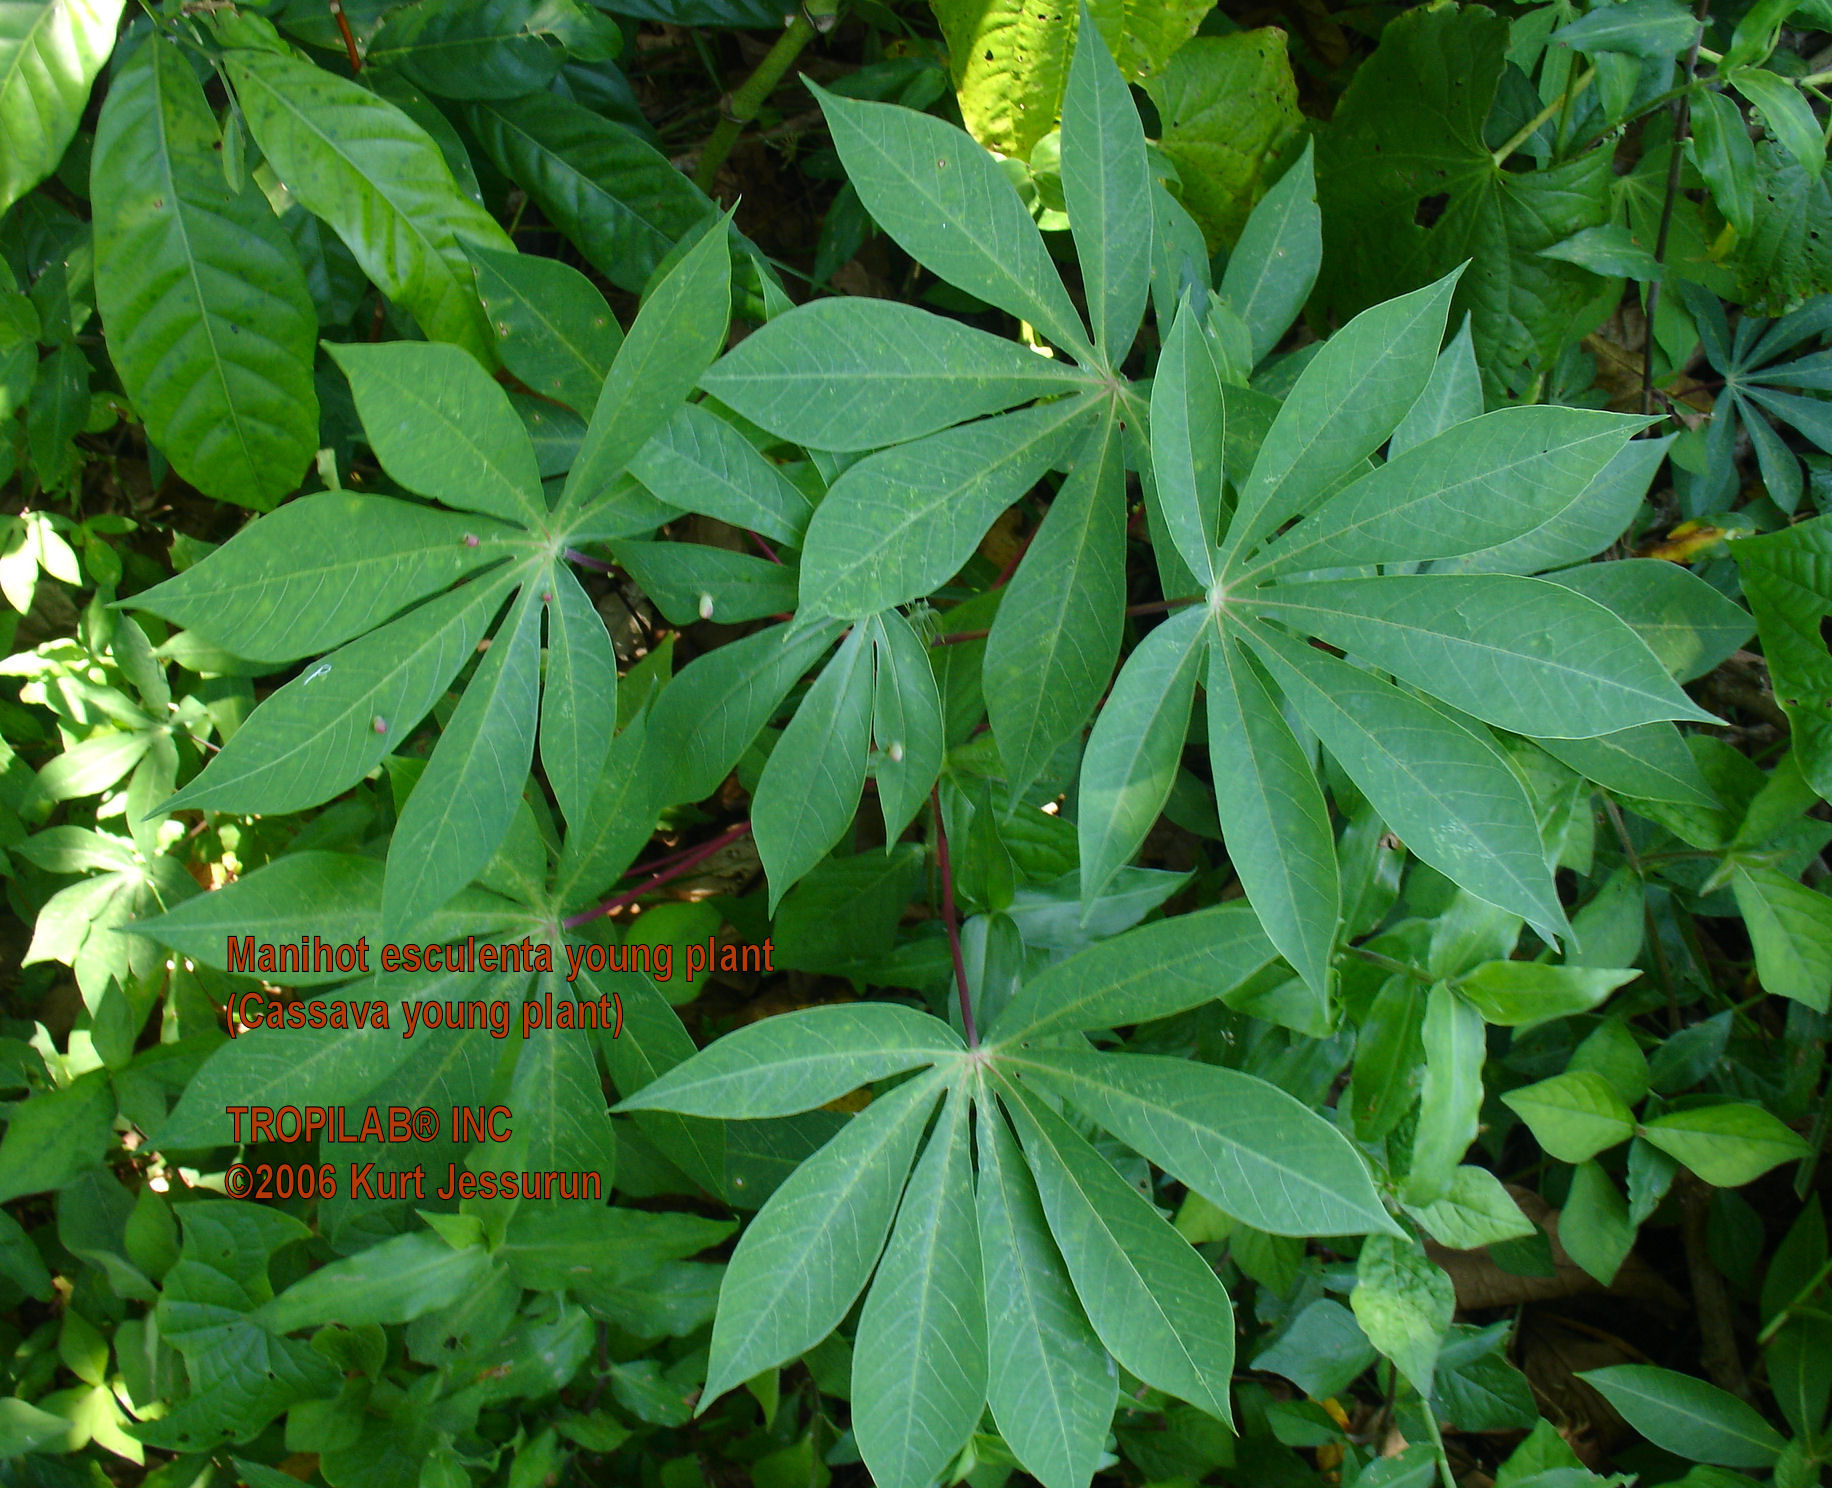 Manihot esculenta - Cassava young plant